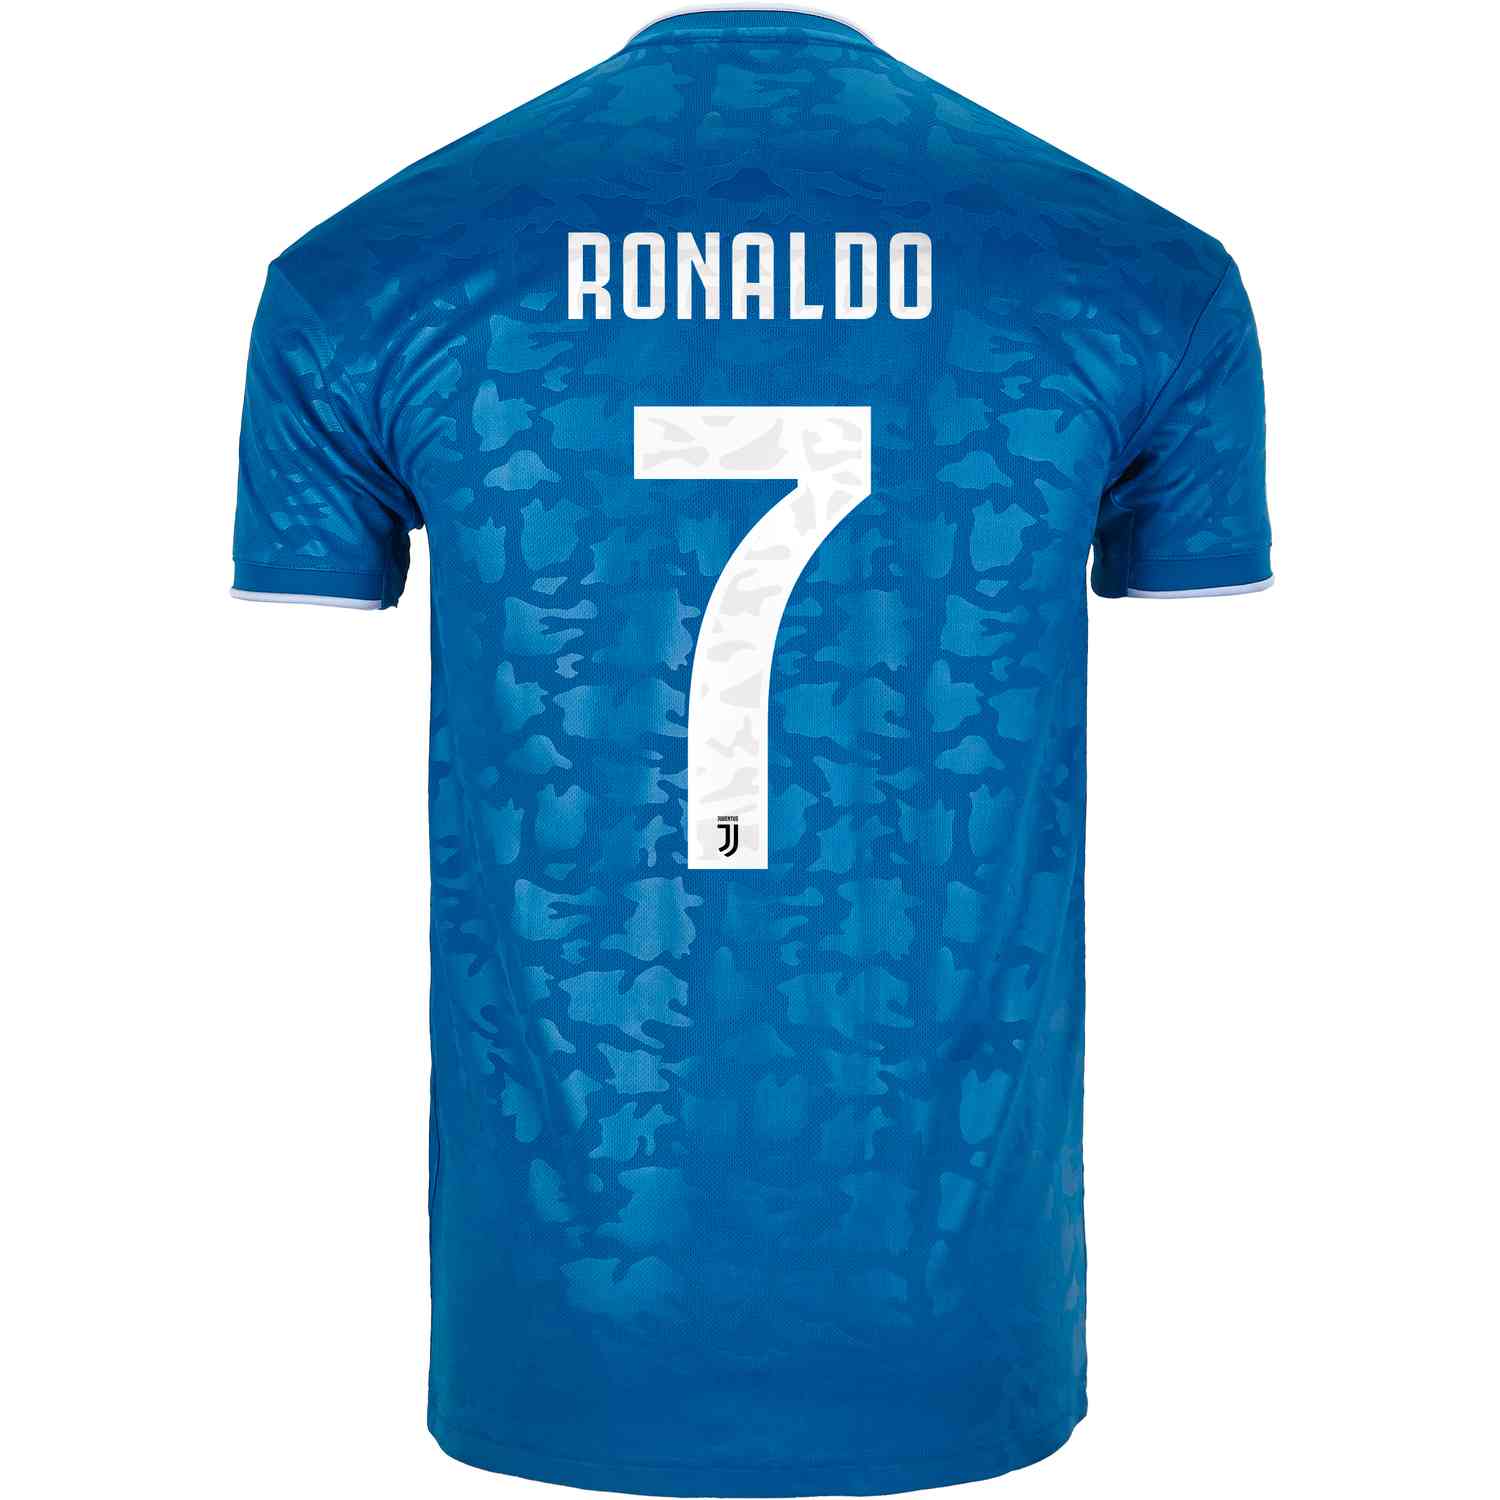 ronaldo blue juventus jersey